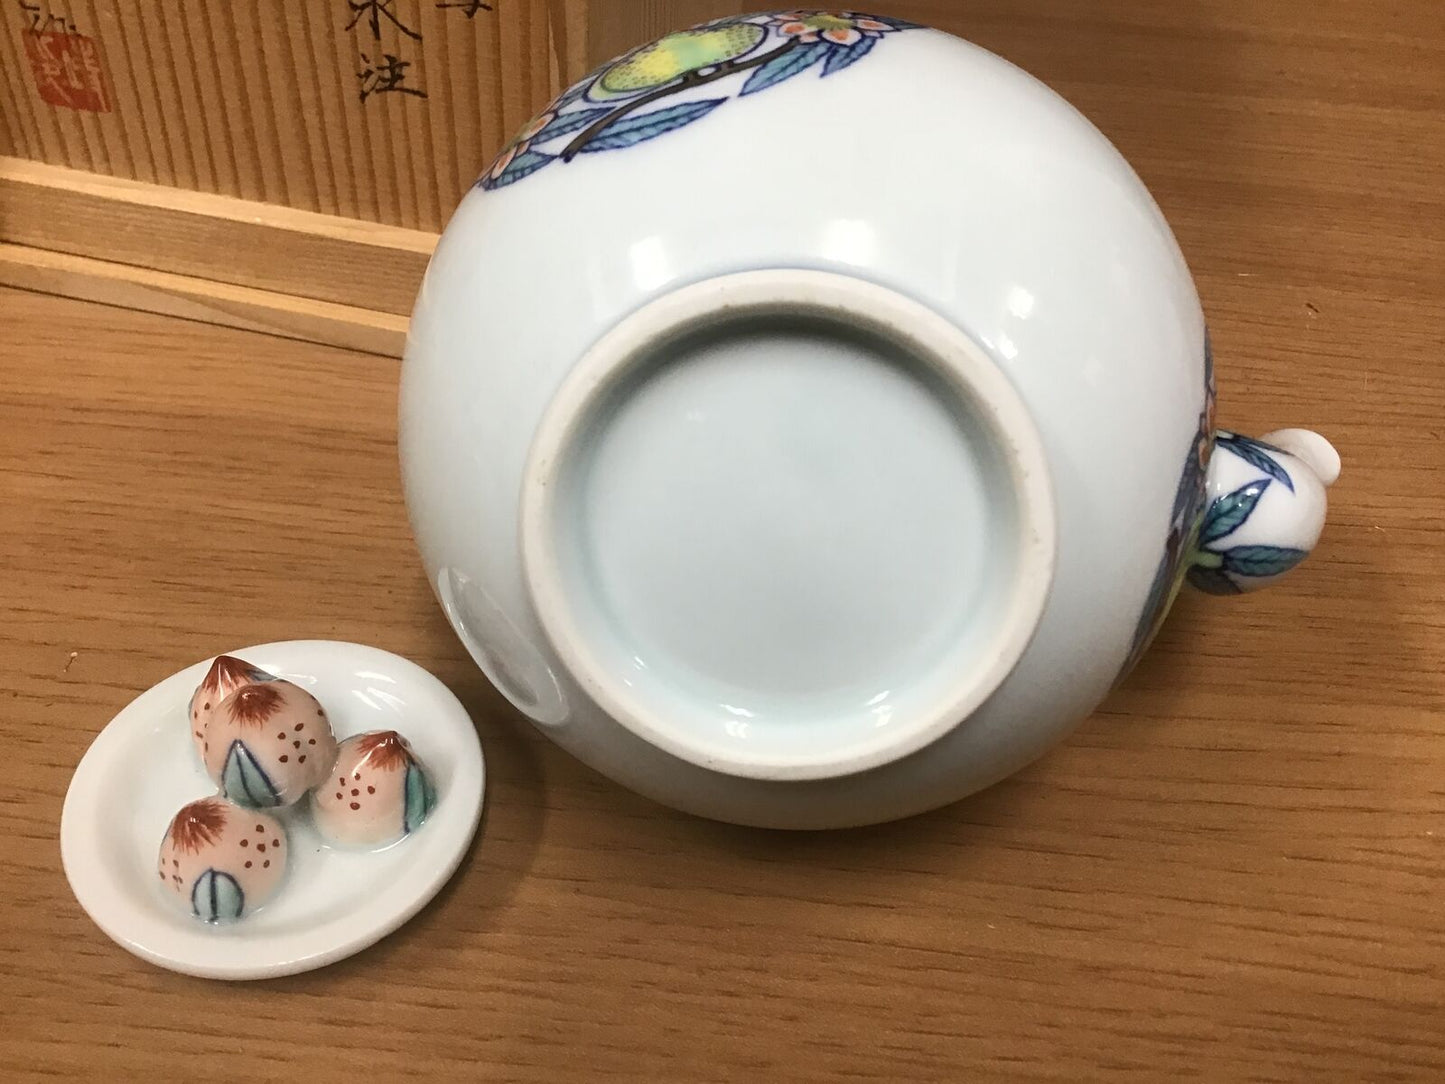 Y0889 TEA POT Water Jug signed Seto-ware Japanese Tea Ceremony antique teapot